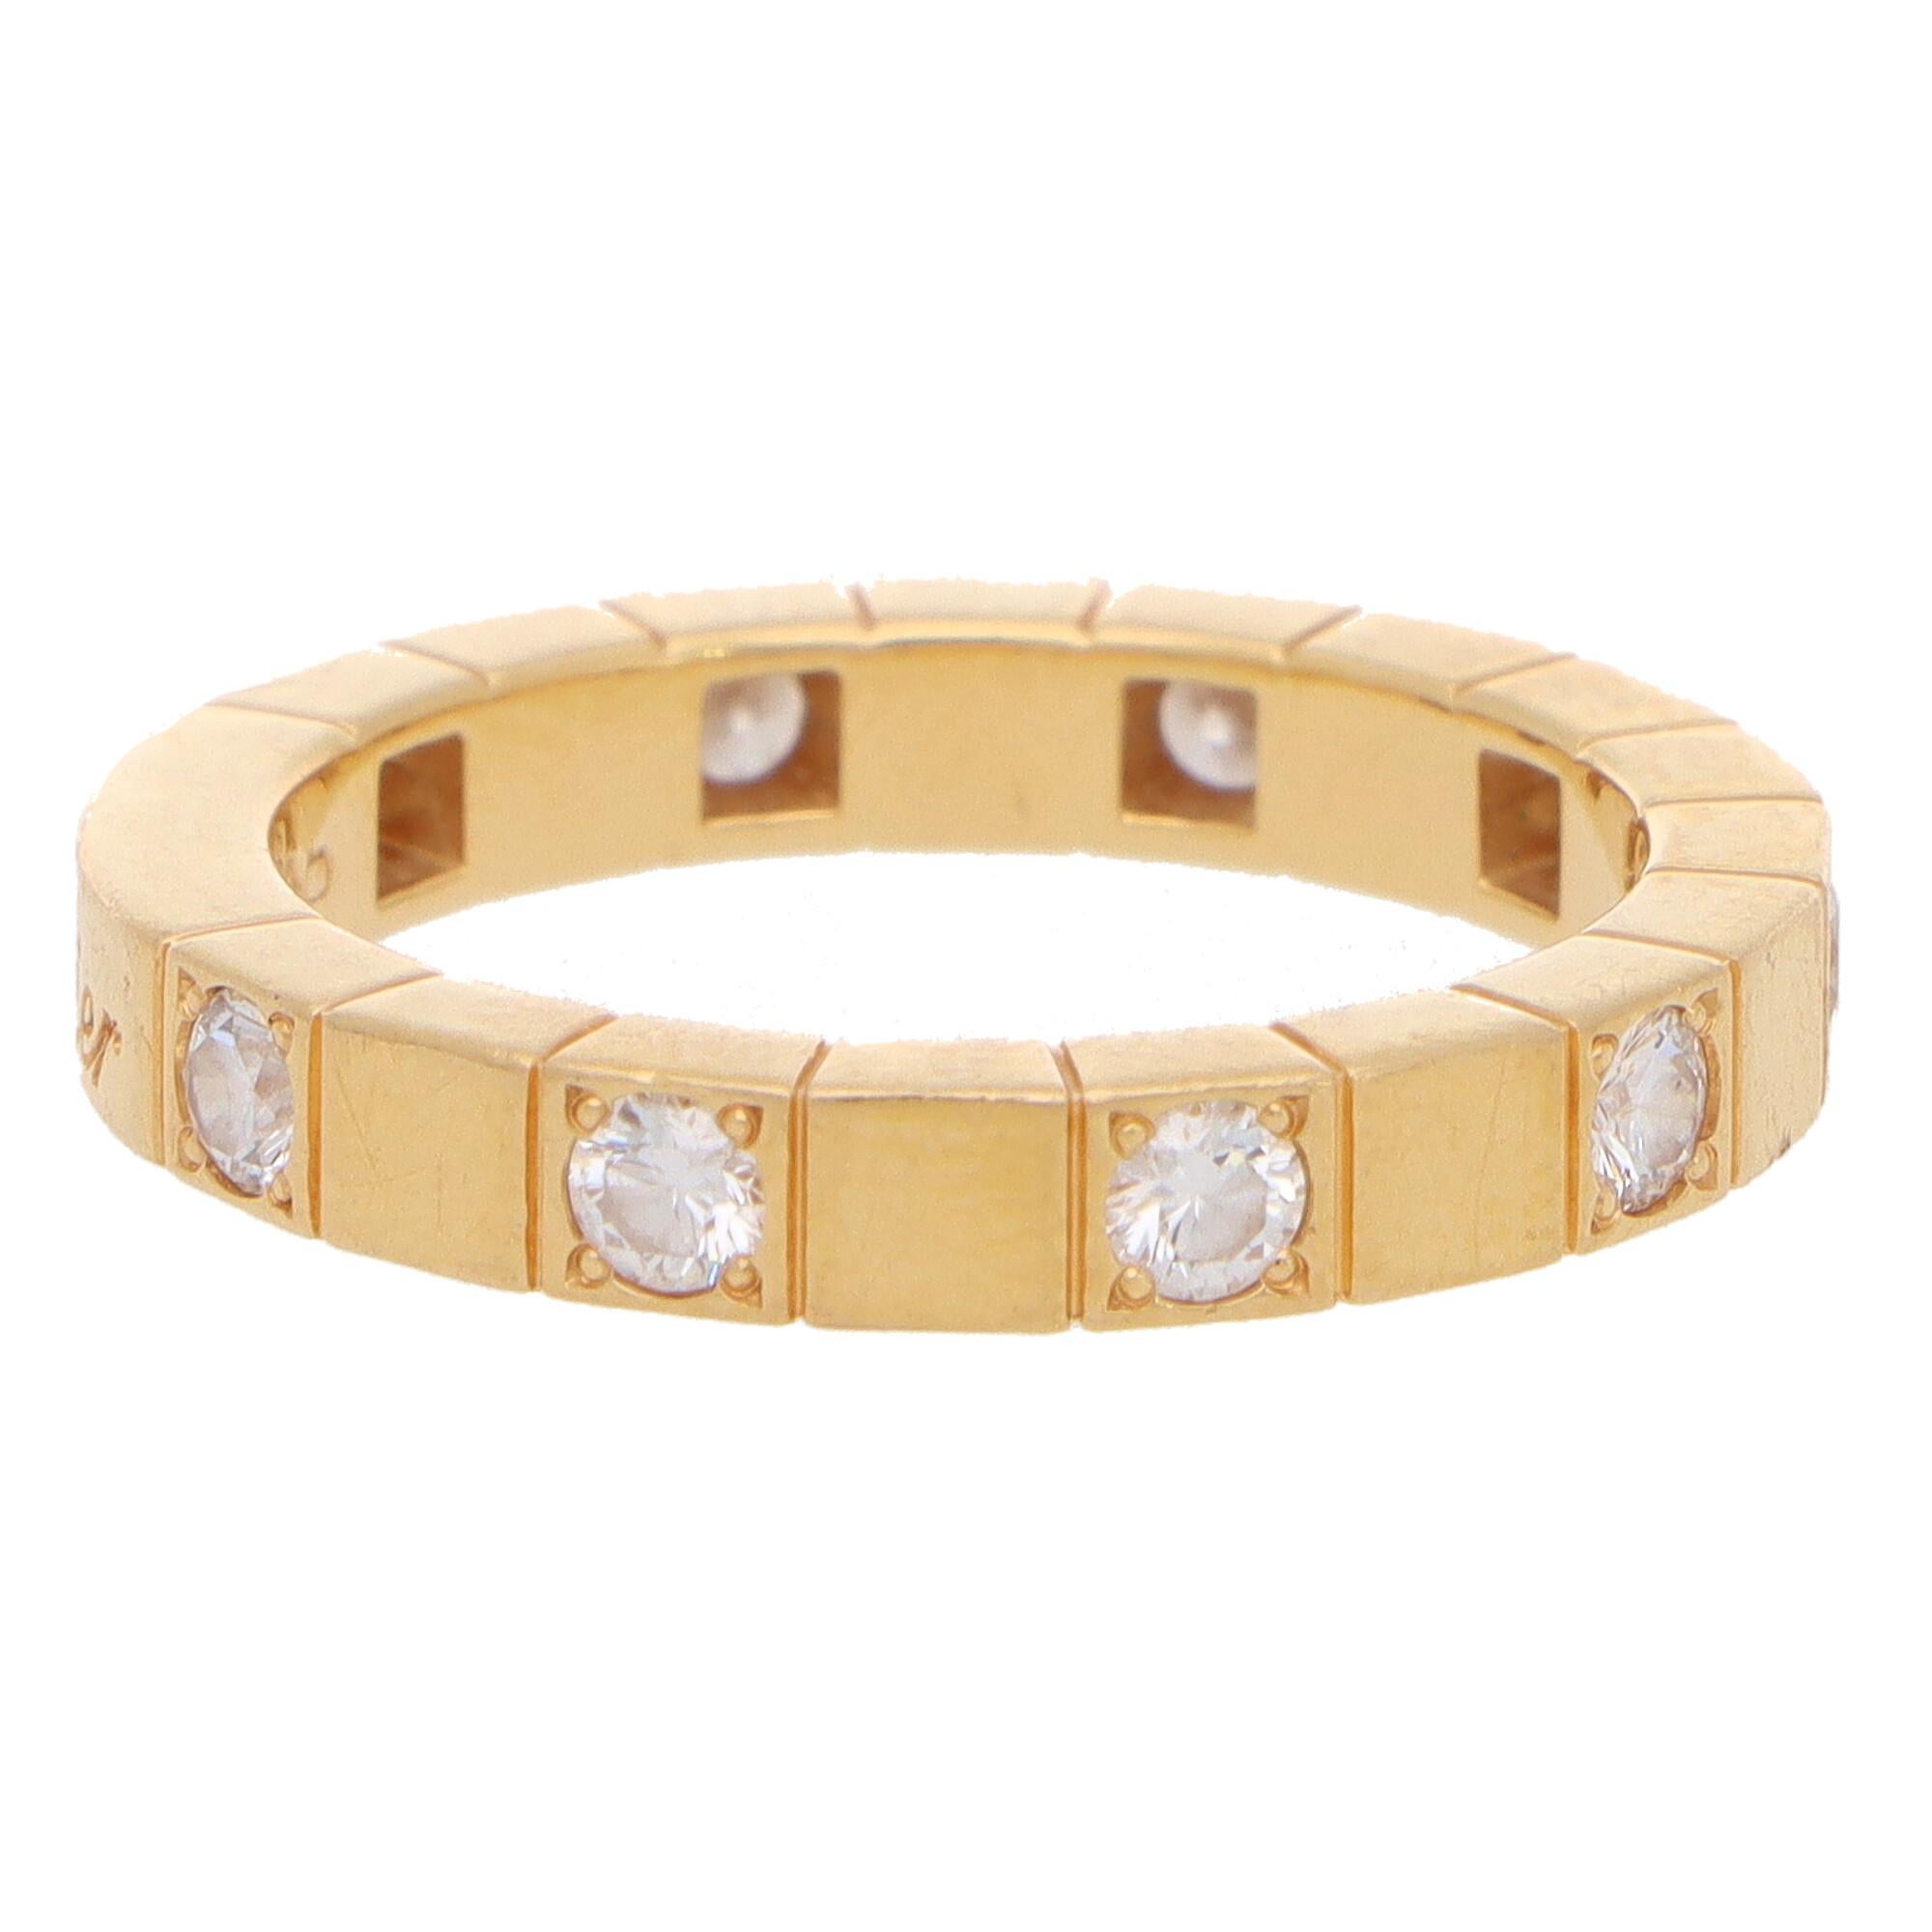 Round Cut Vintage Cartier Lanières Diamond Eternity Band Ring Set in 18k Rose Gold